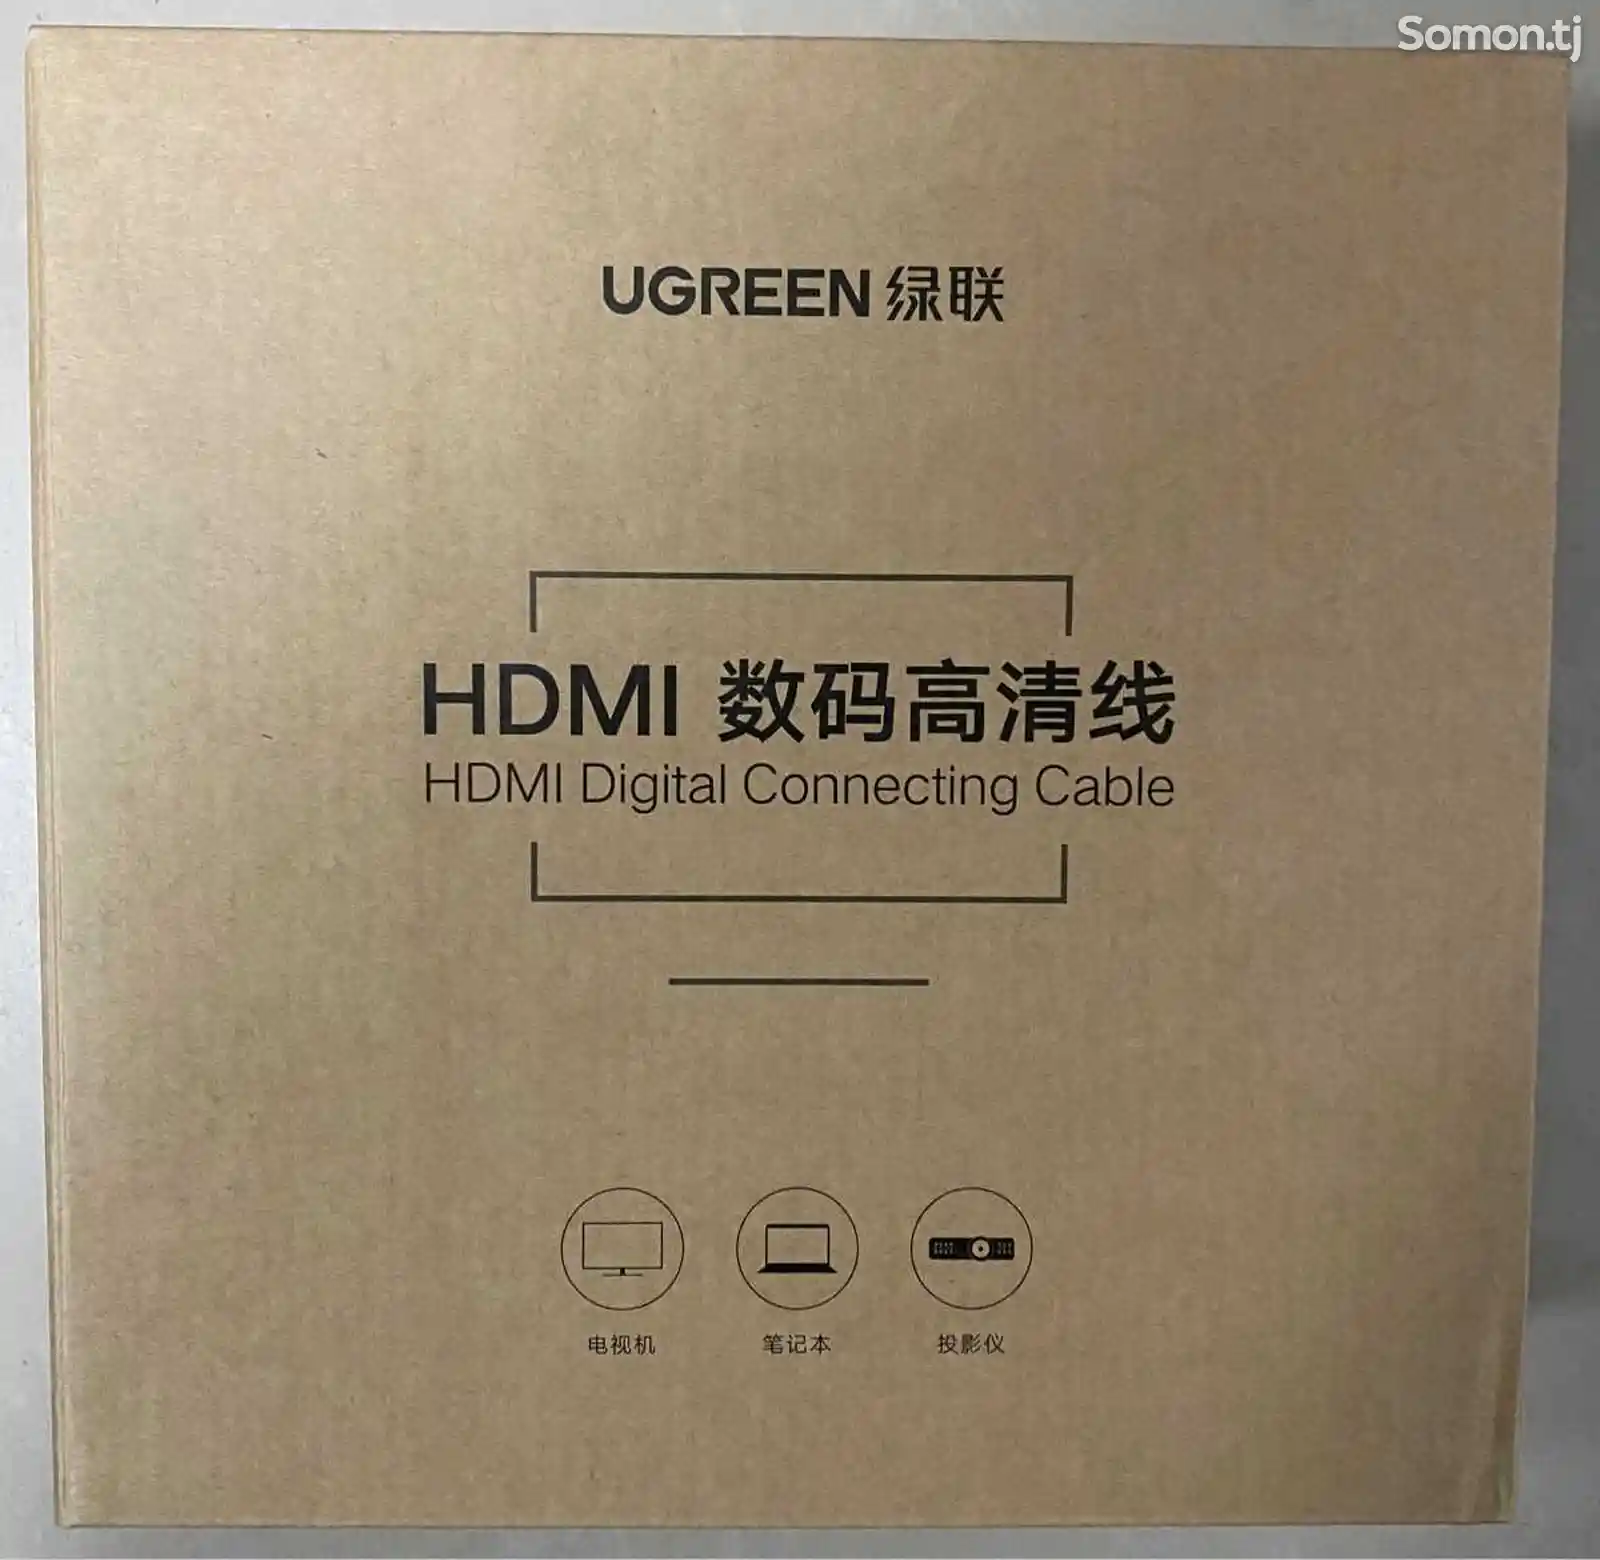 Ugreen HDMI 15m UGREEN-4